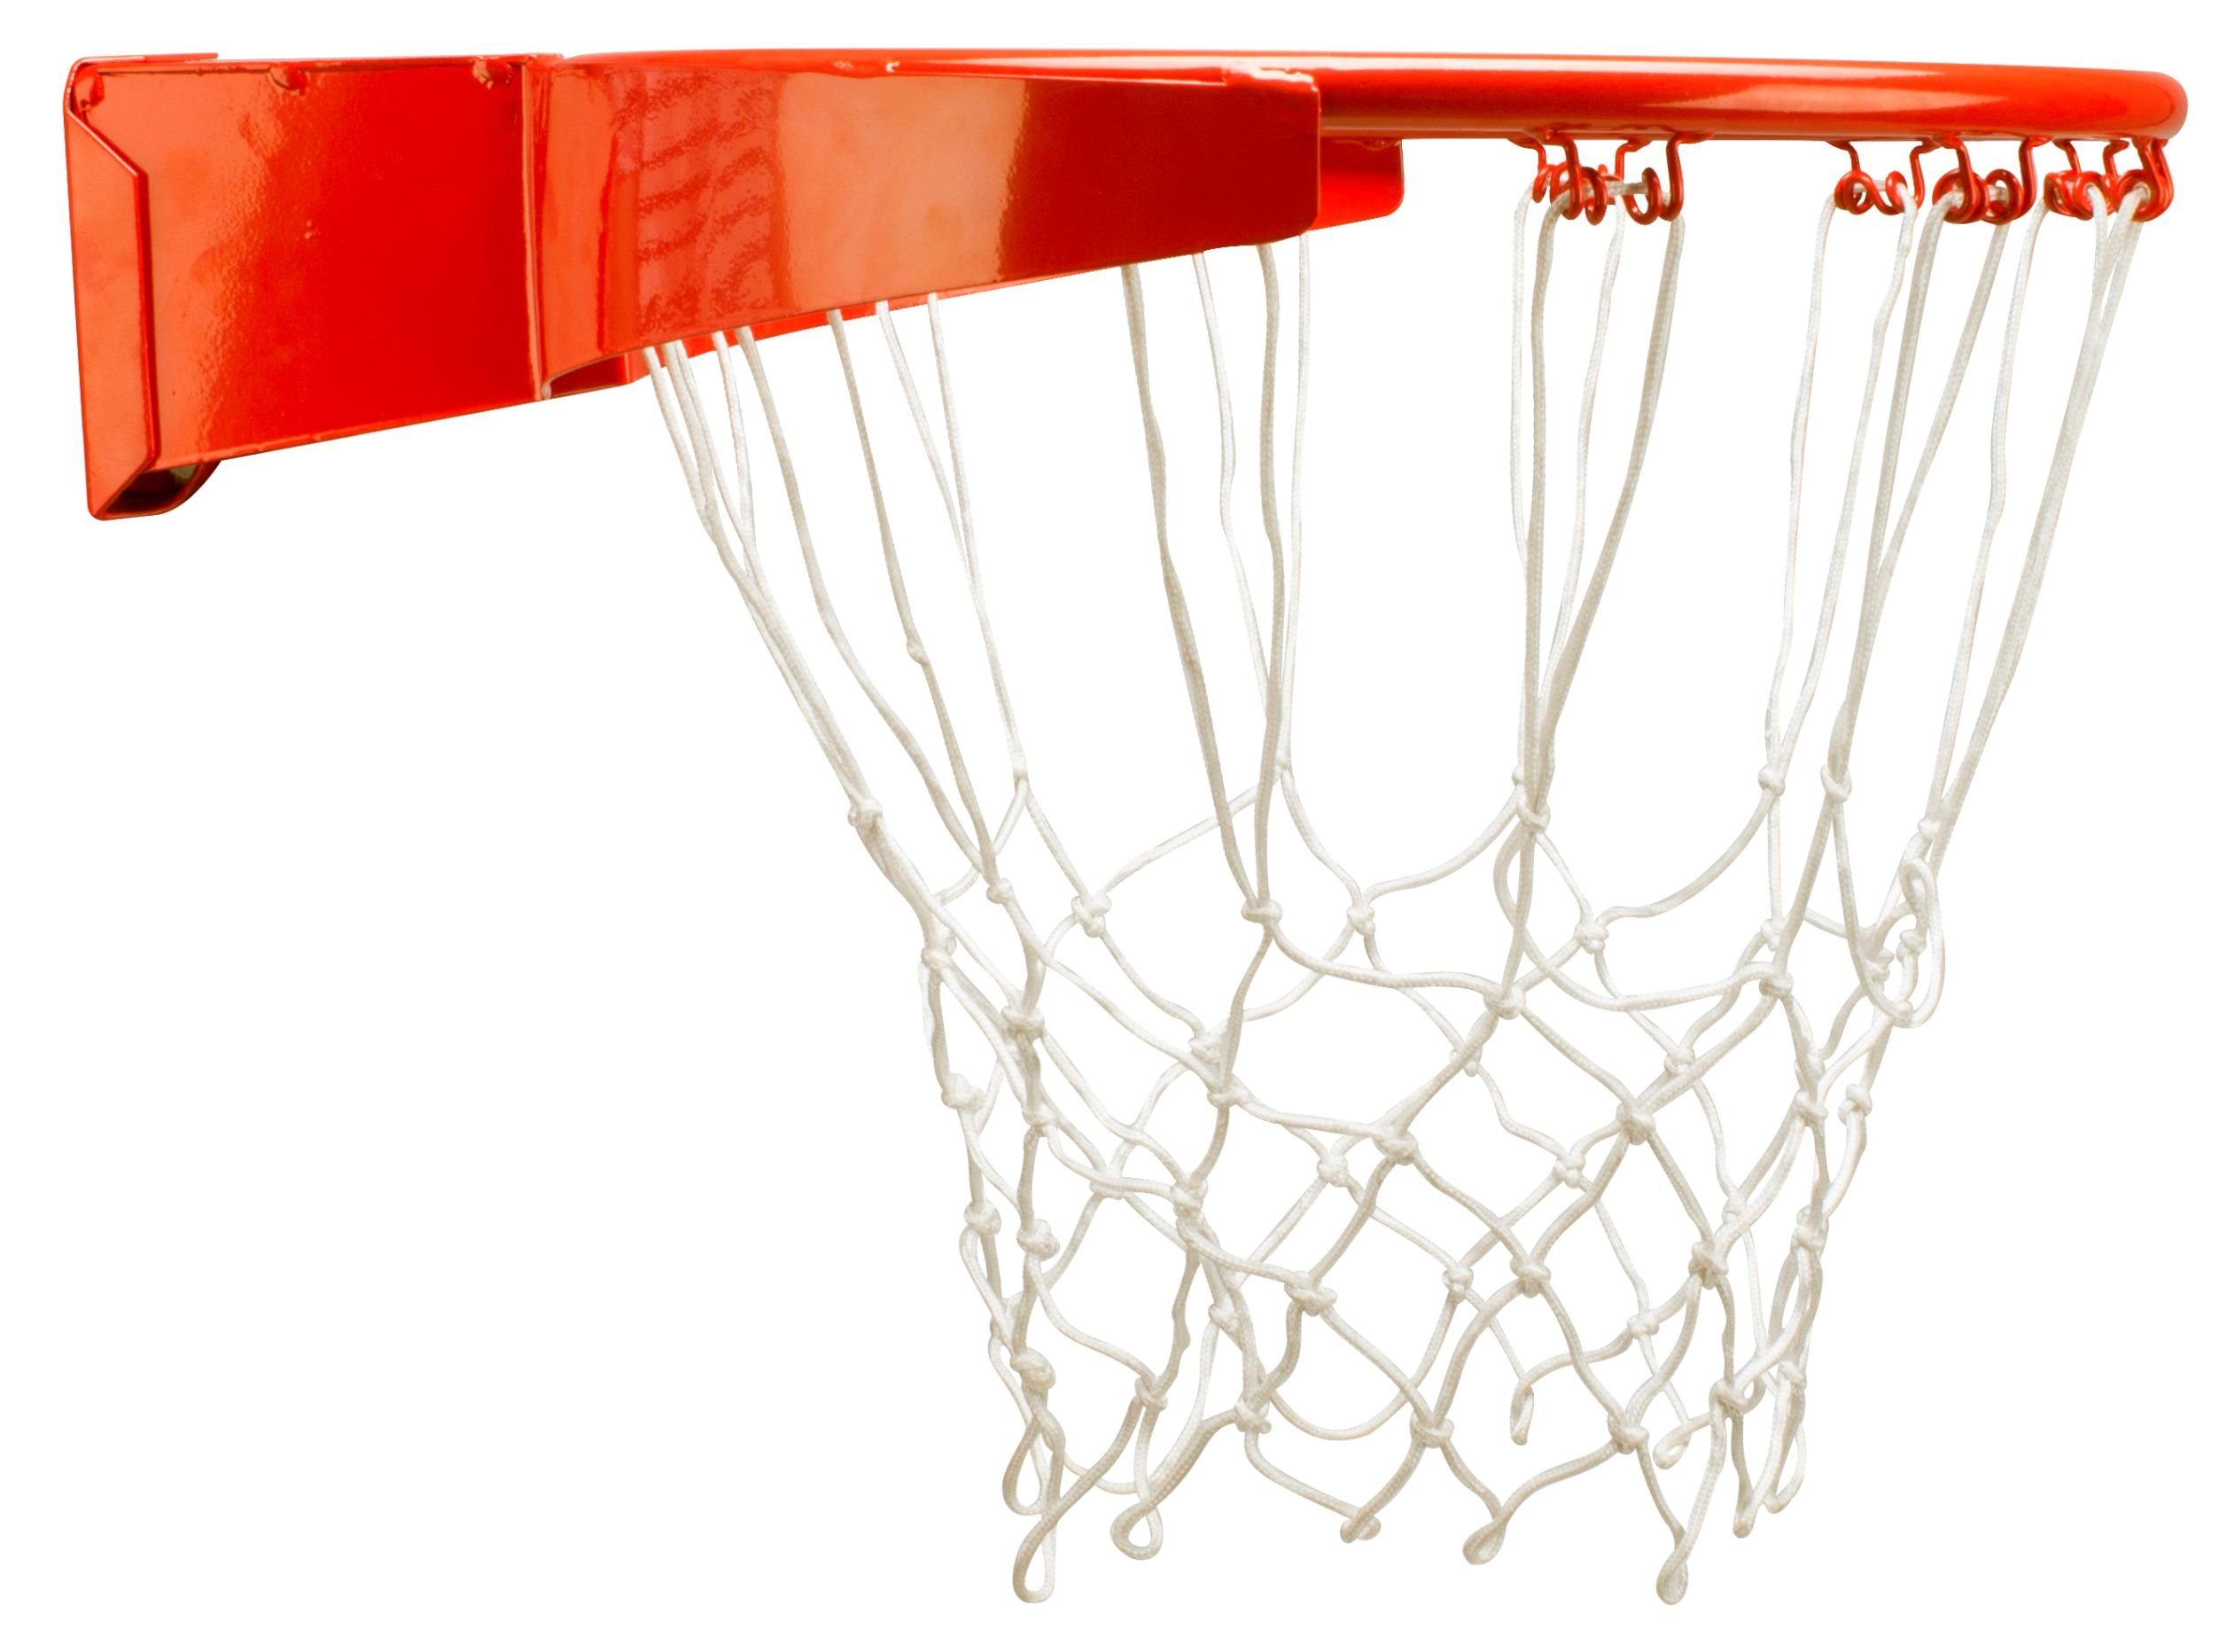 Avento Basketballkorb Basketballkorb Slam Dunk • Basketballring Mit Feder